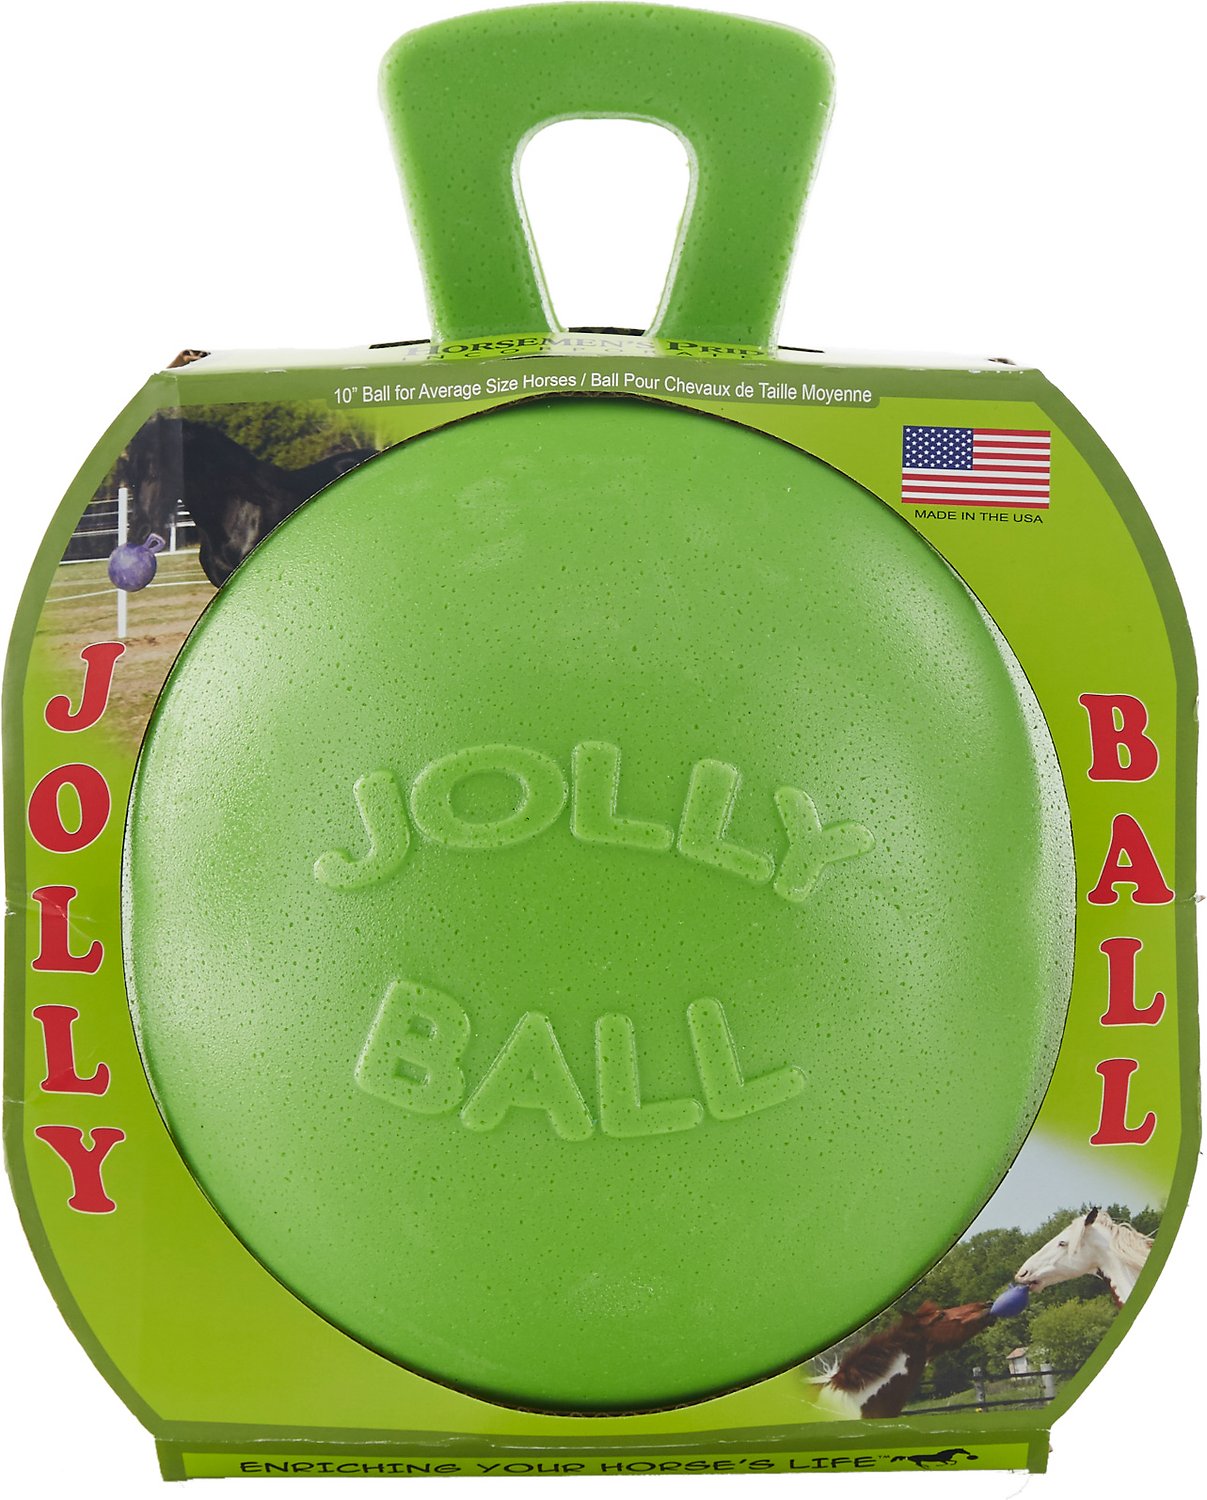 Jolly Ball 10 The Mill Bel Air